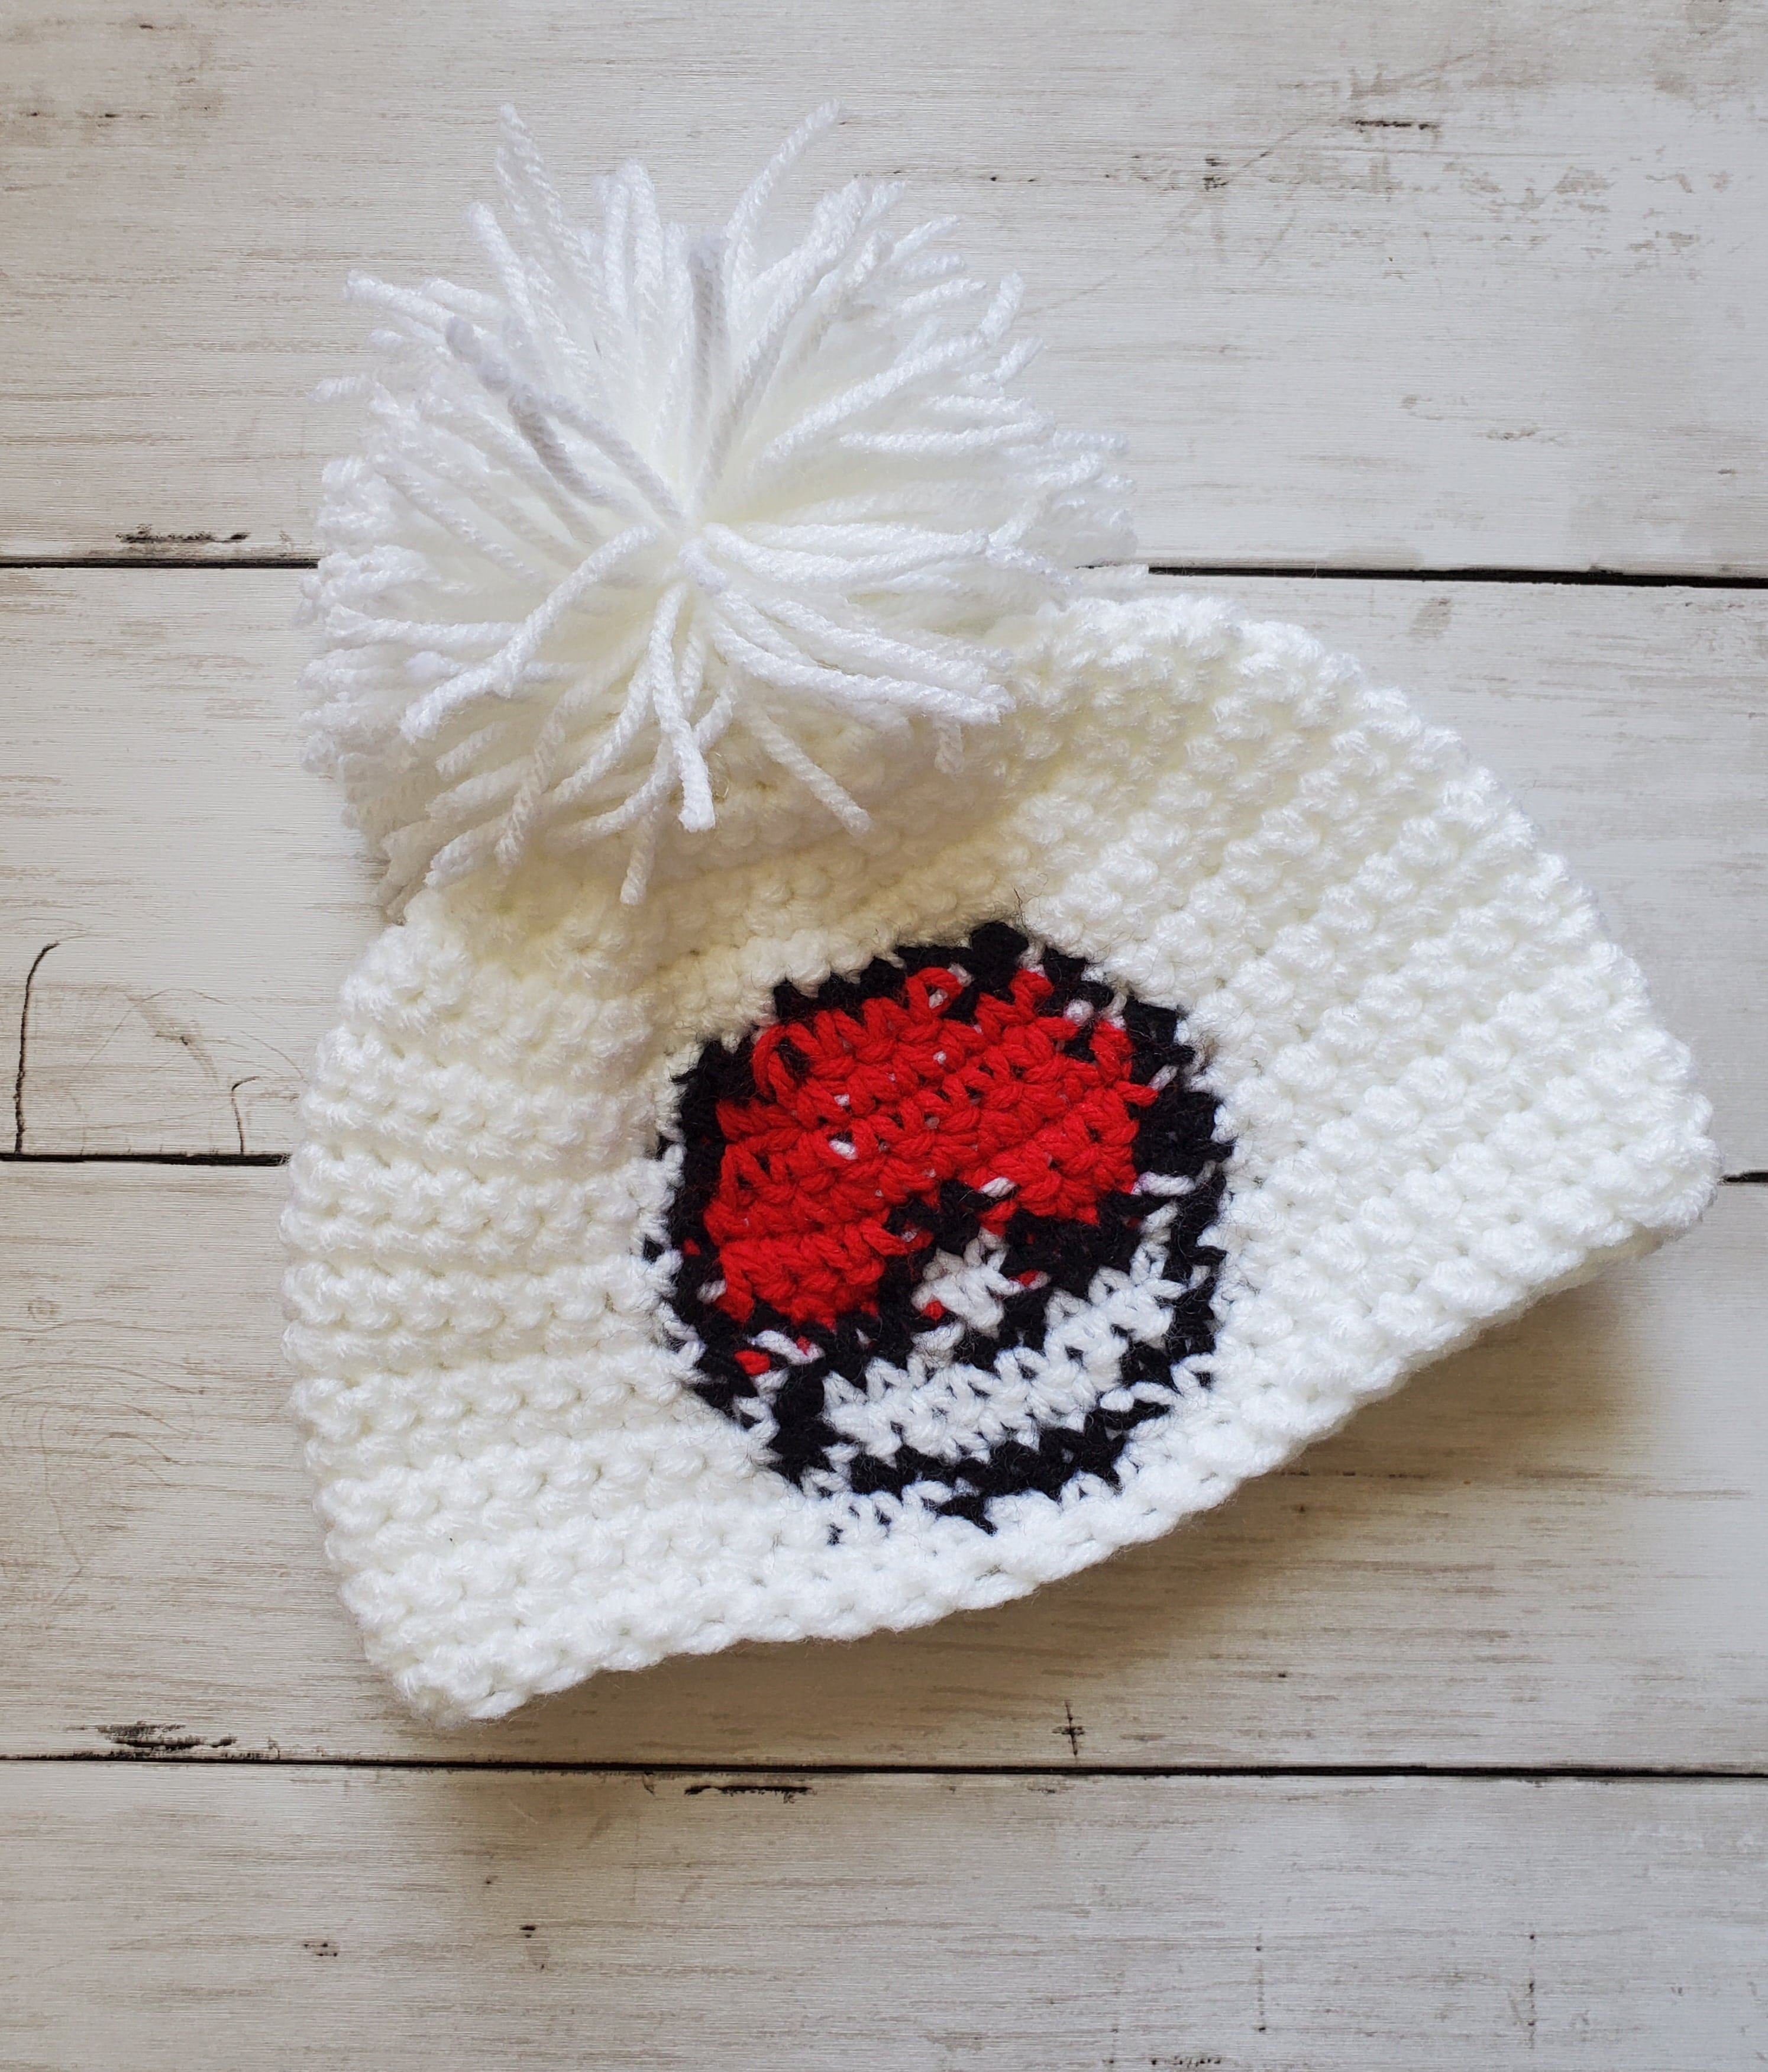 Pokeball Inspired Loom Knitted Hat